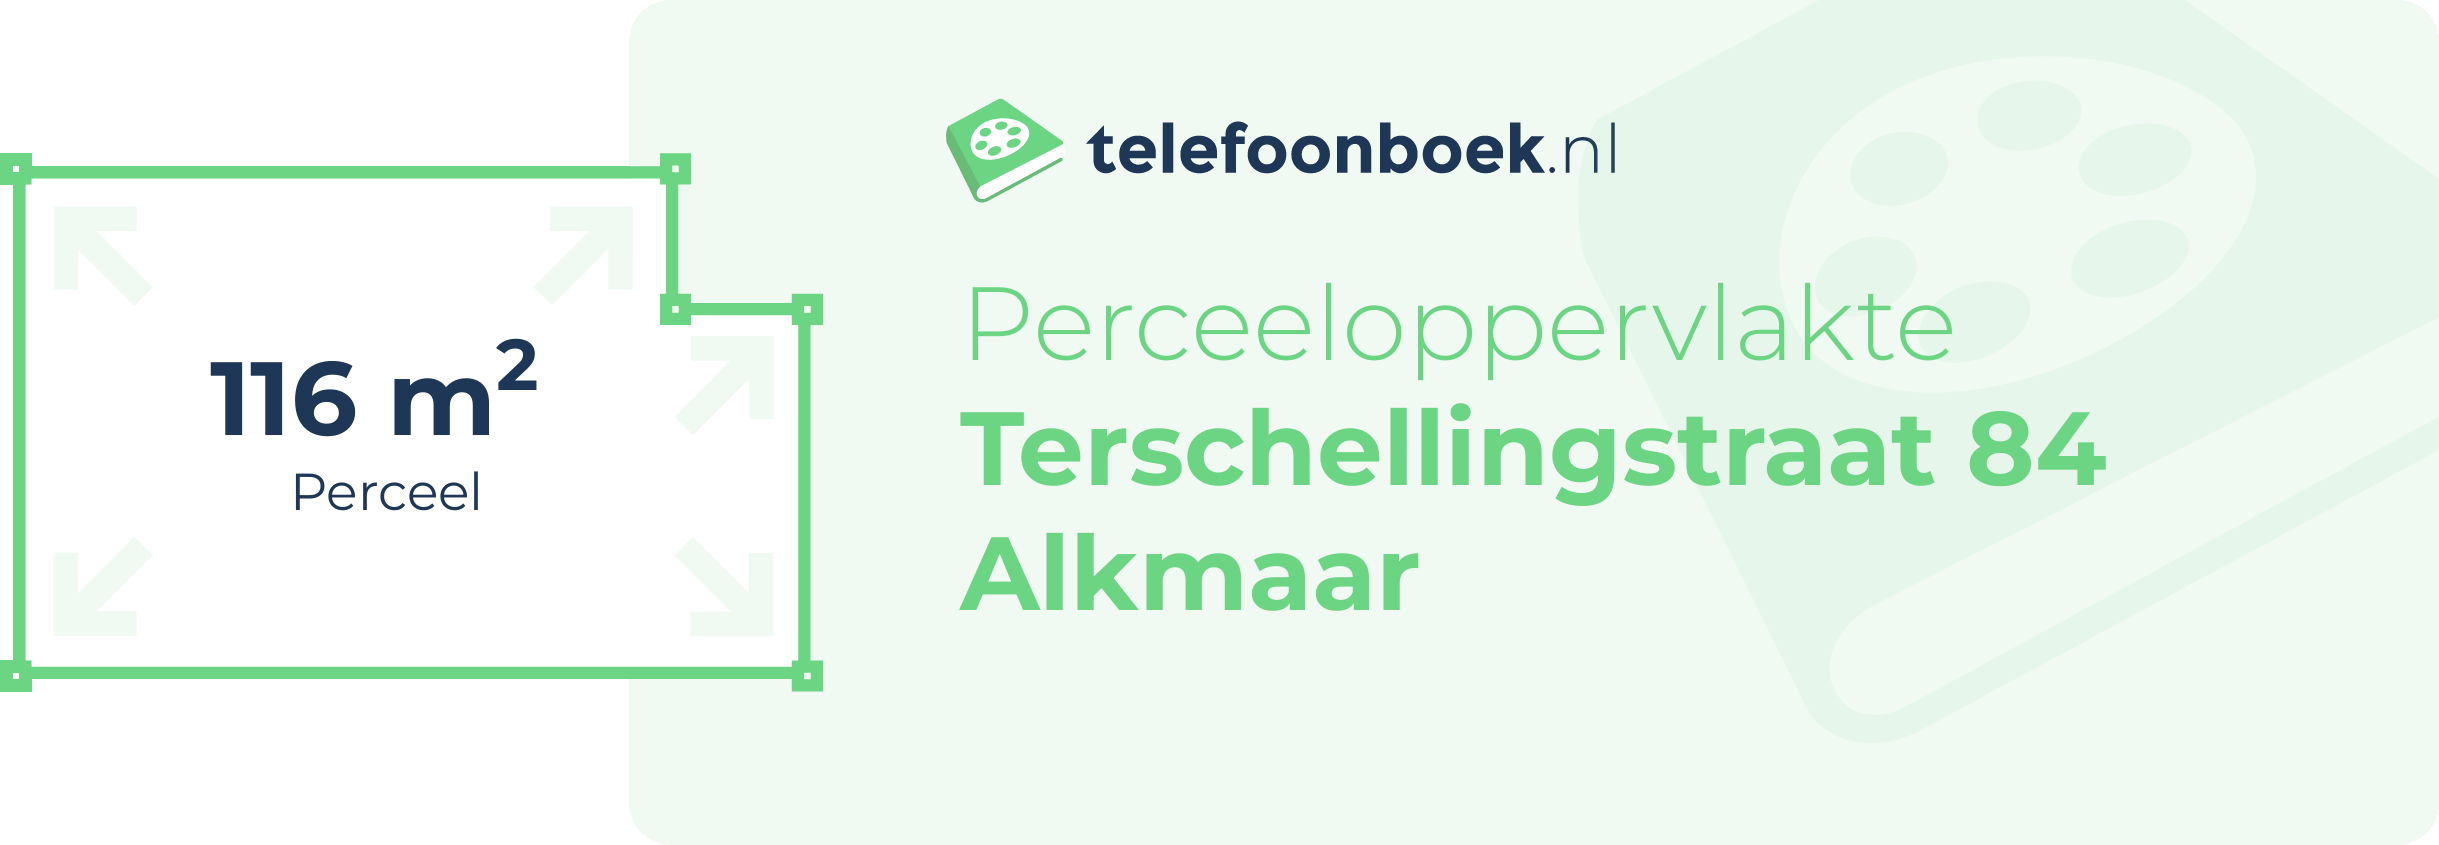 Perceeloppervlakte Terschellingstraat 84 Alkmaar